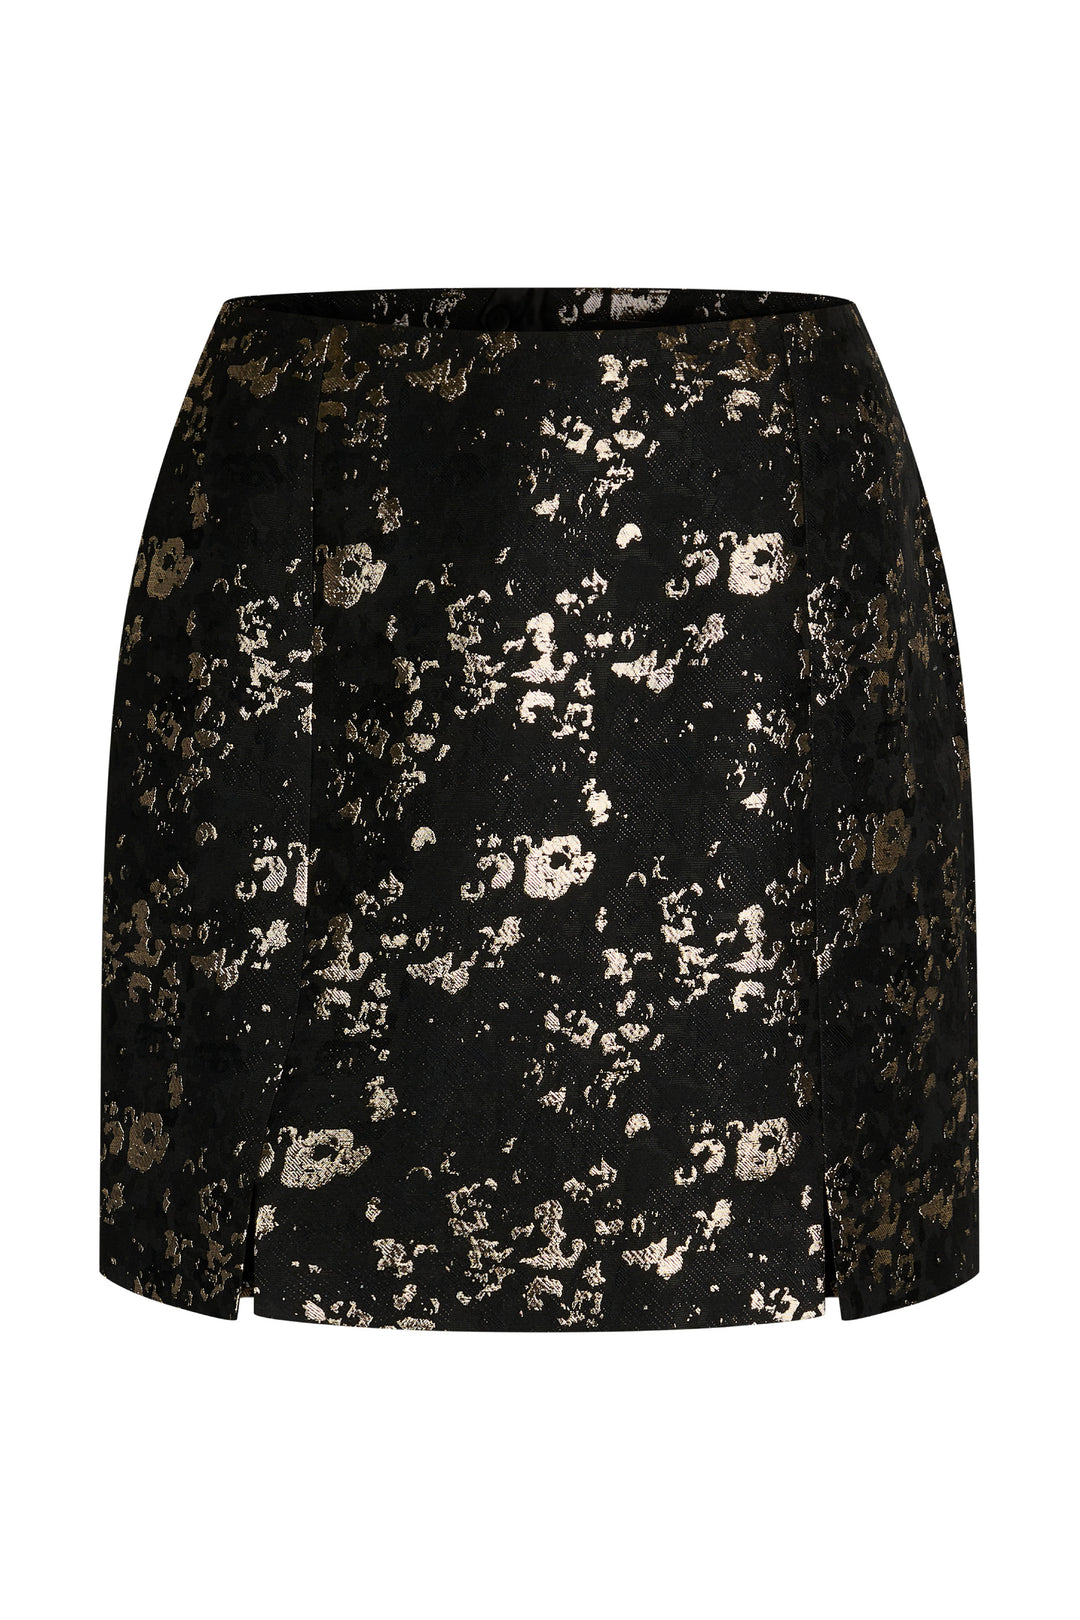 Bruuns Bazaar Women CapeBBSusan skirt Skirt Black/Gold